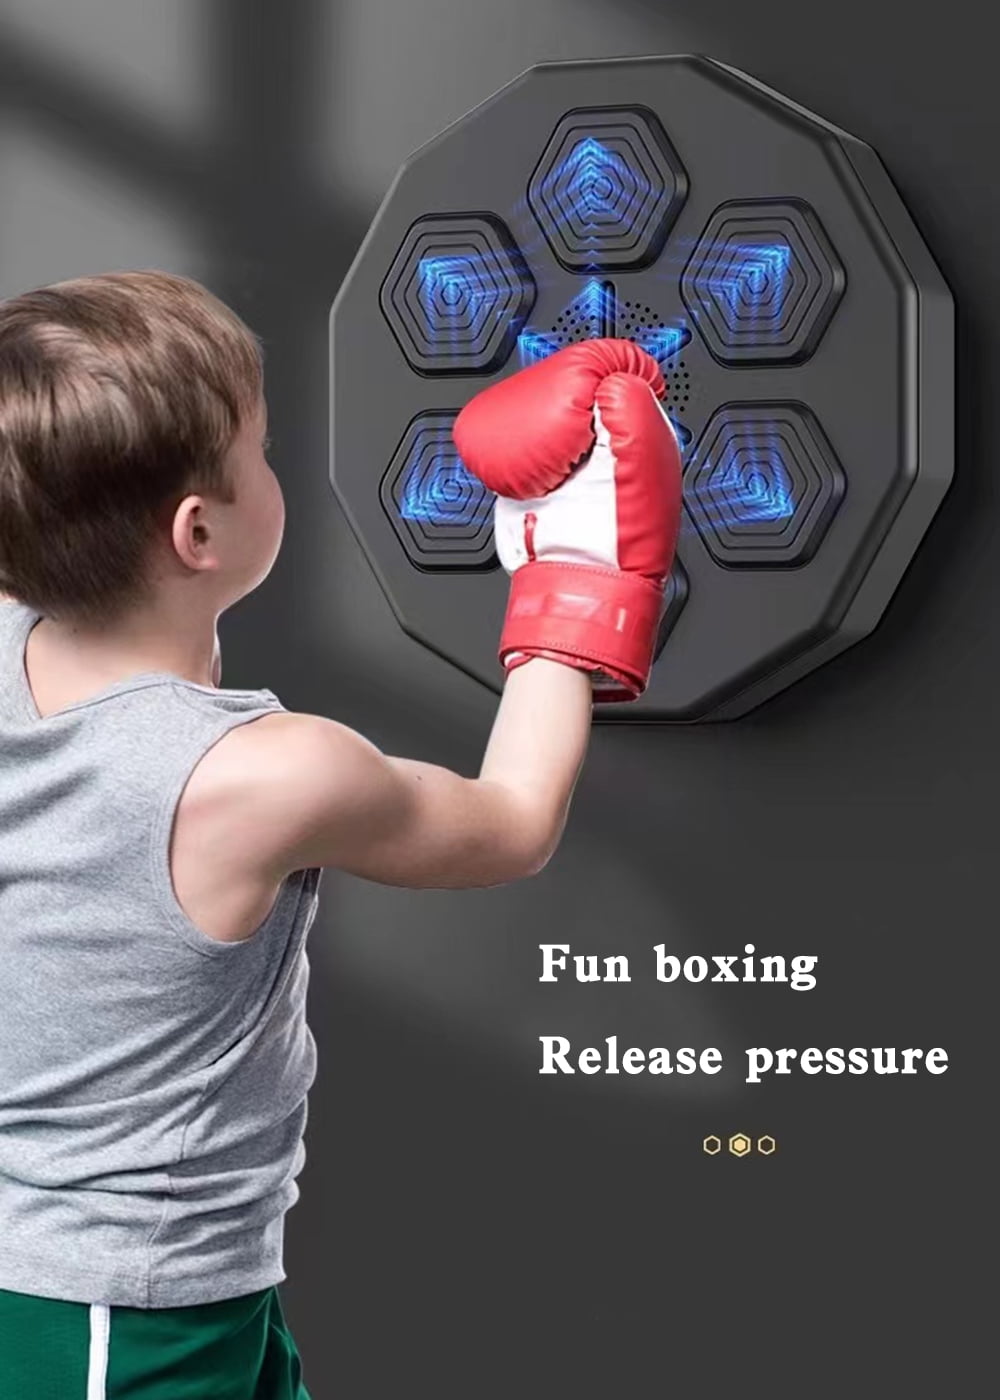 Music Boxing Machine LED Light Music Rhythm Wall Target Bluetooth